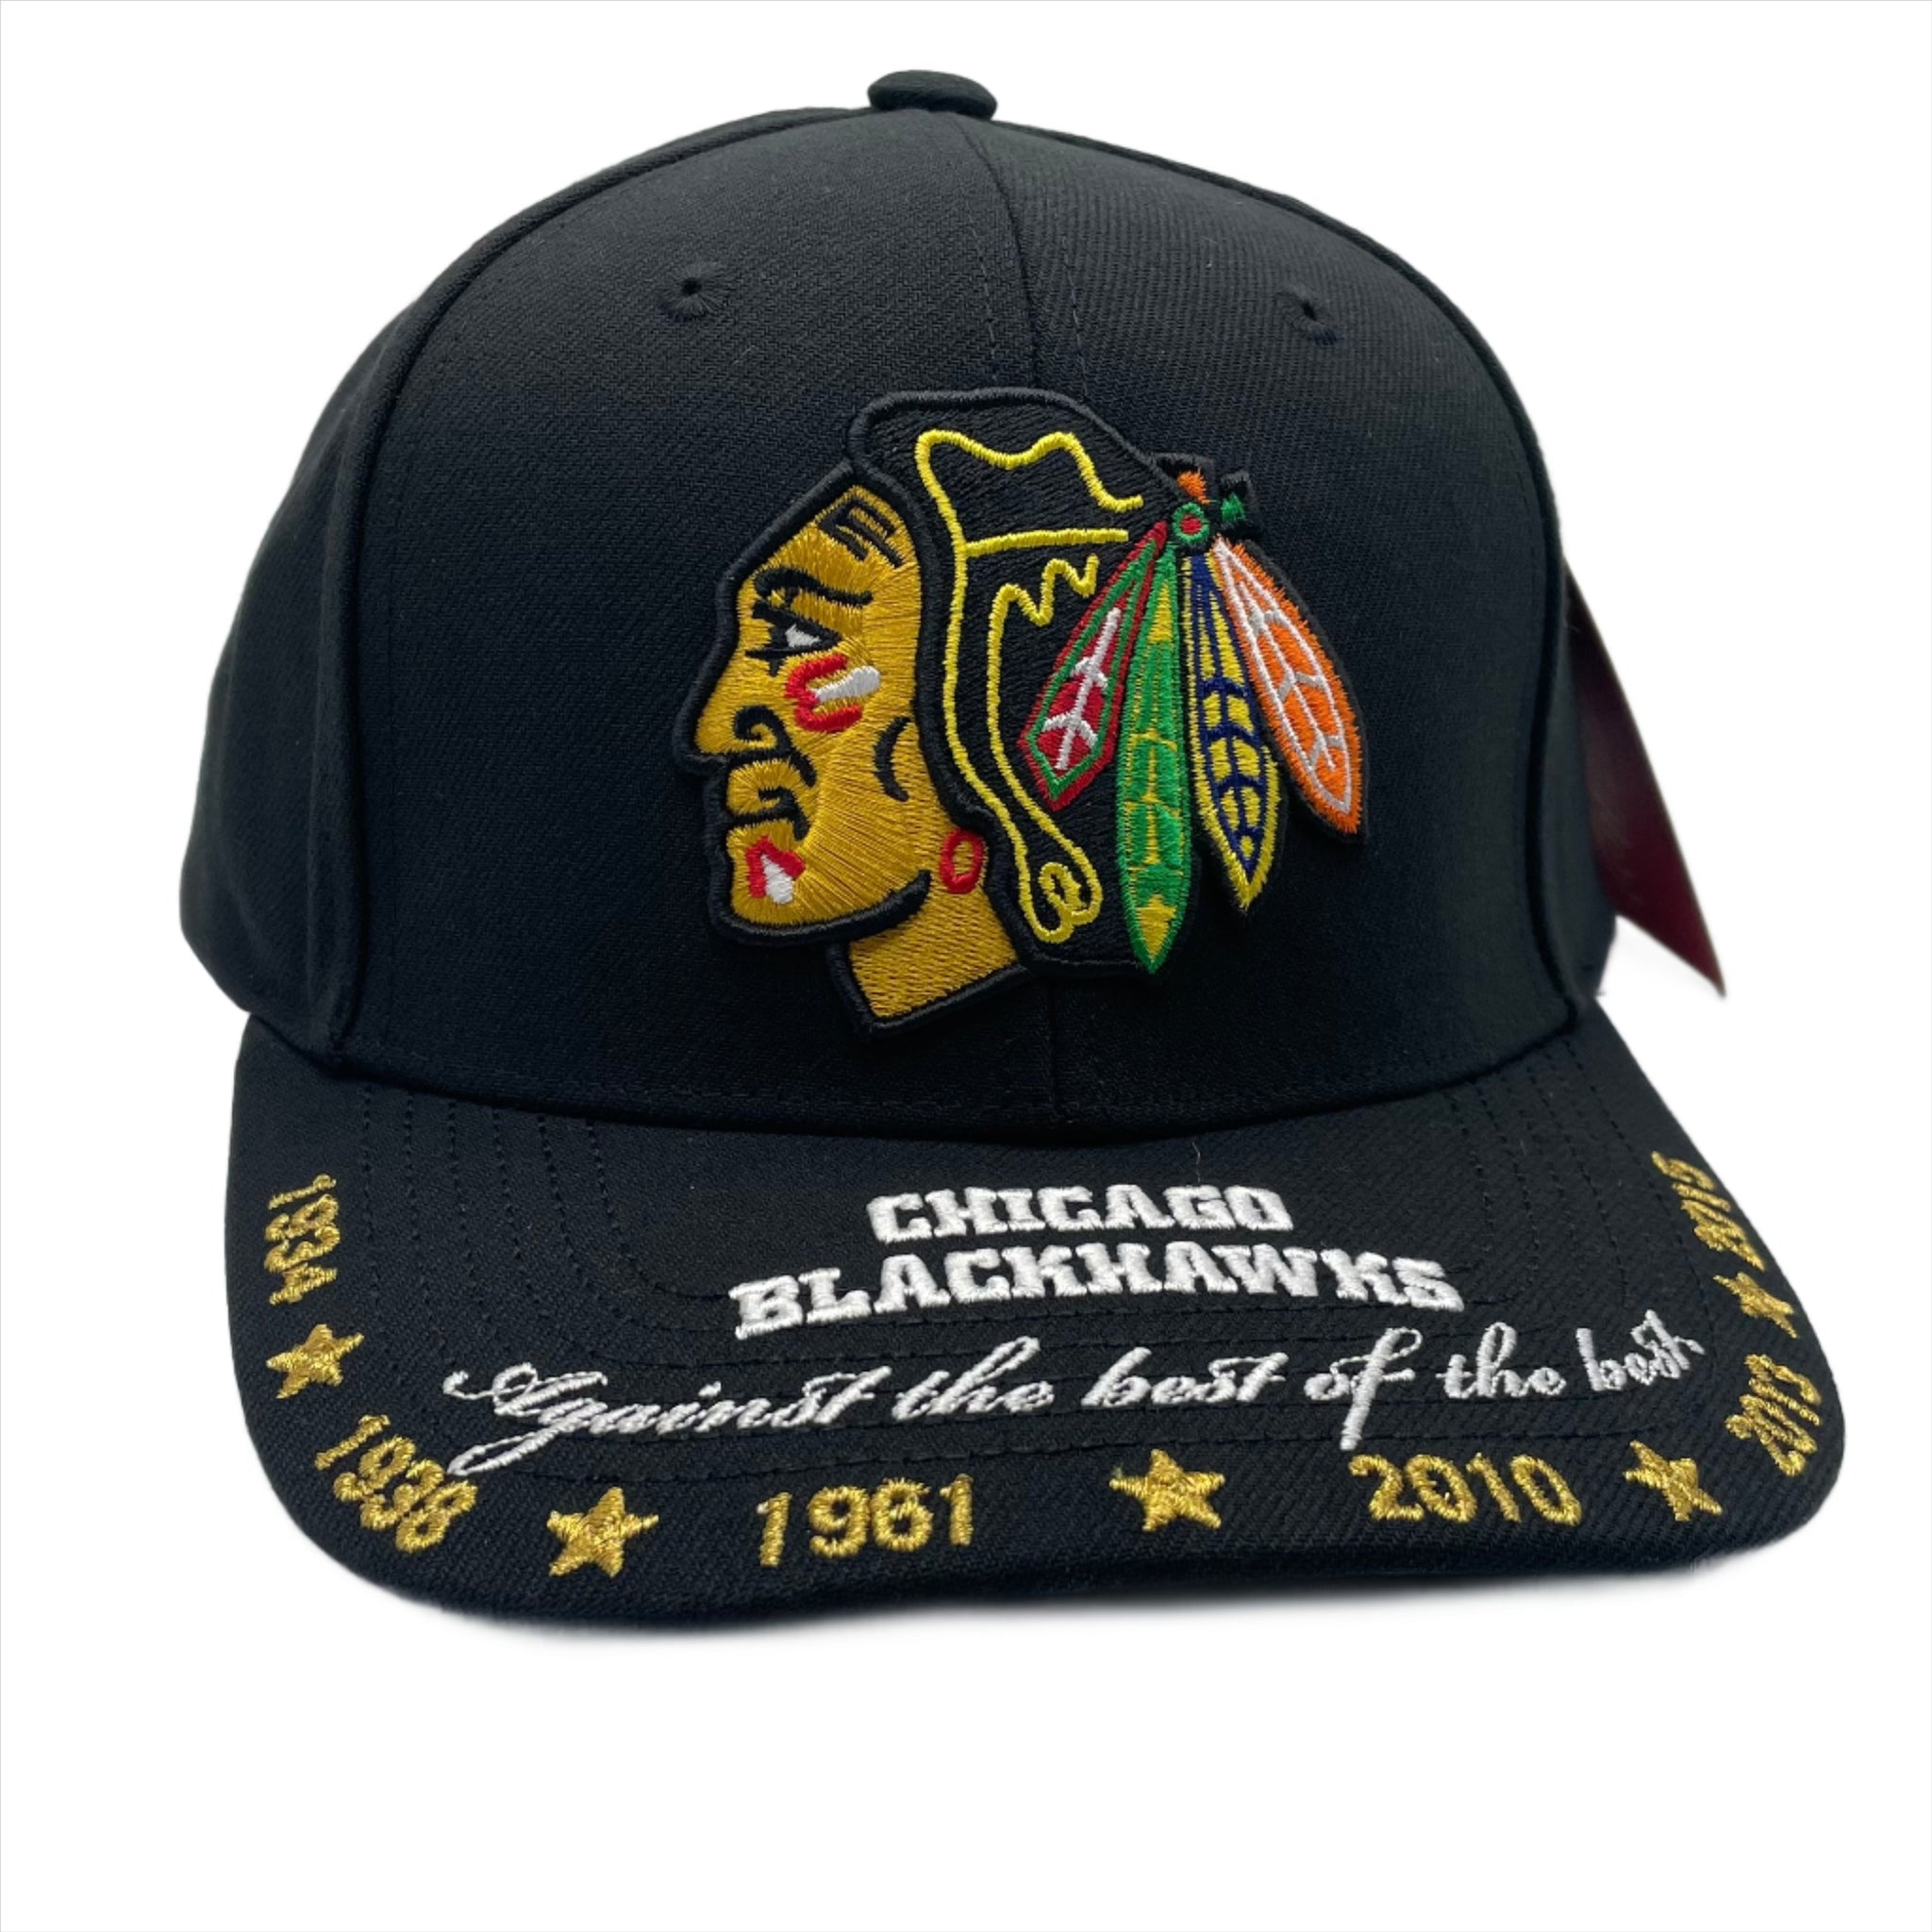 Chicago Blackhawks 'Against the Best of the Best' Snapback Hat